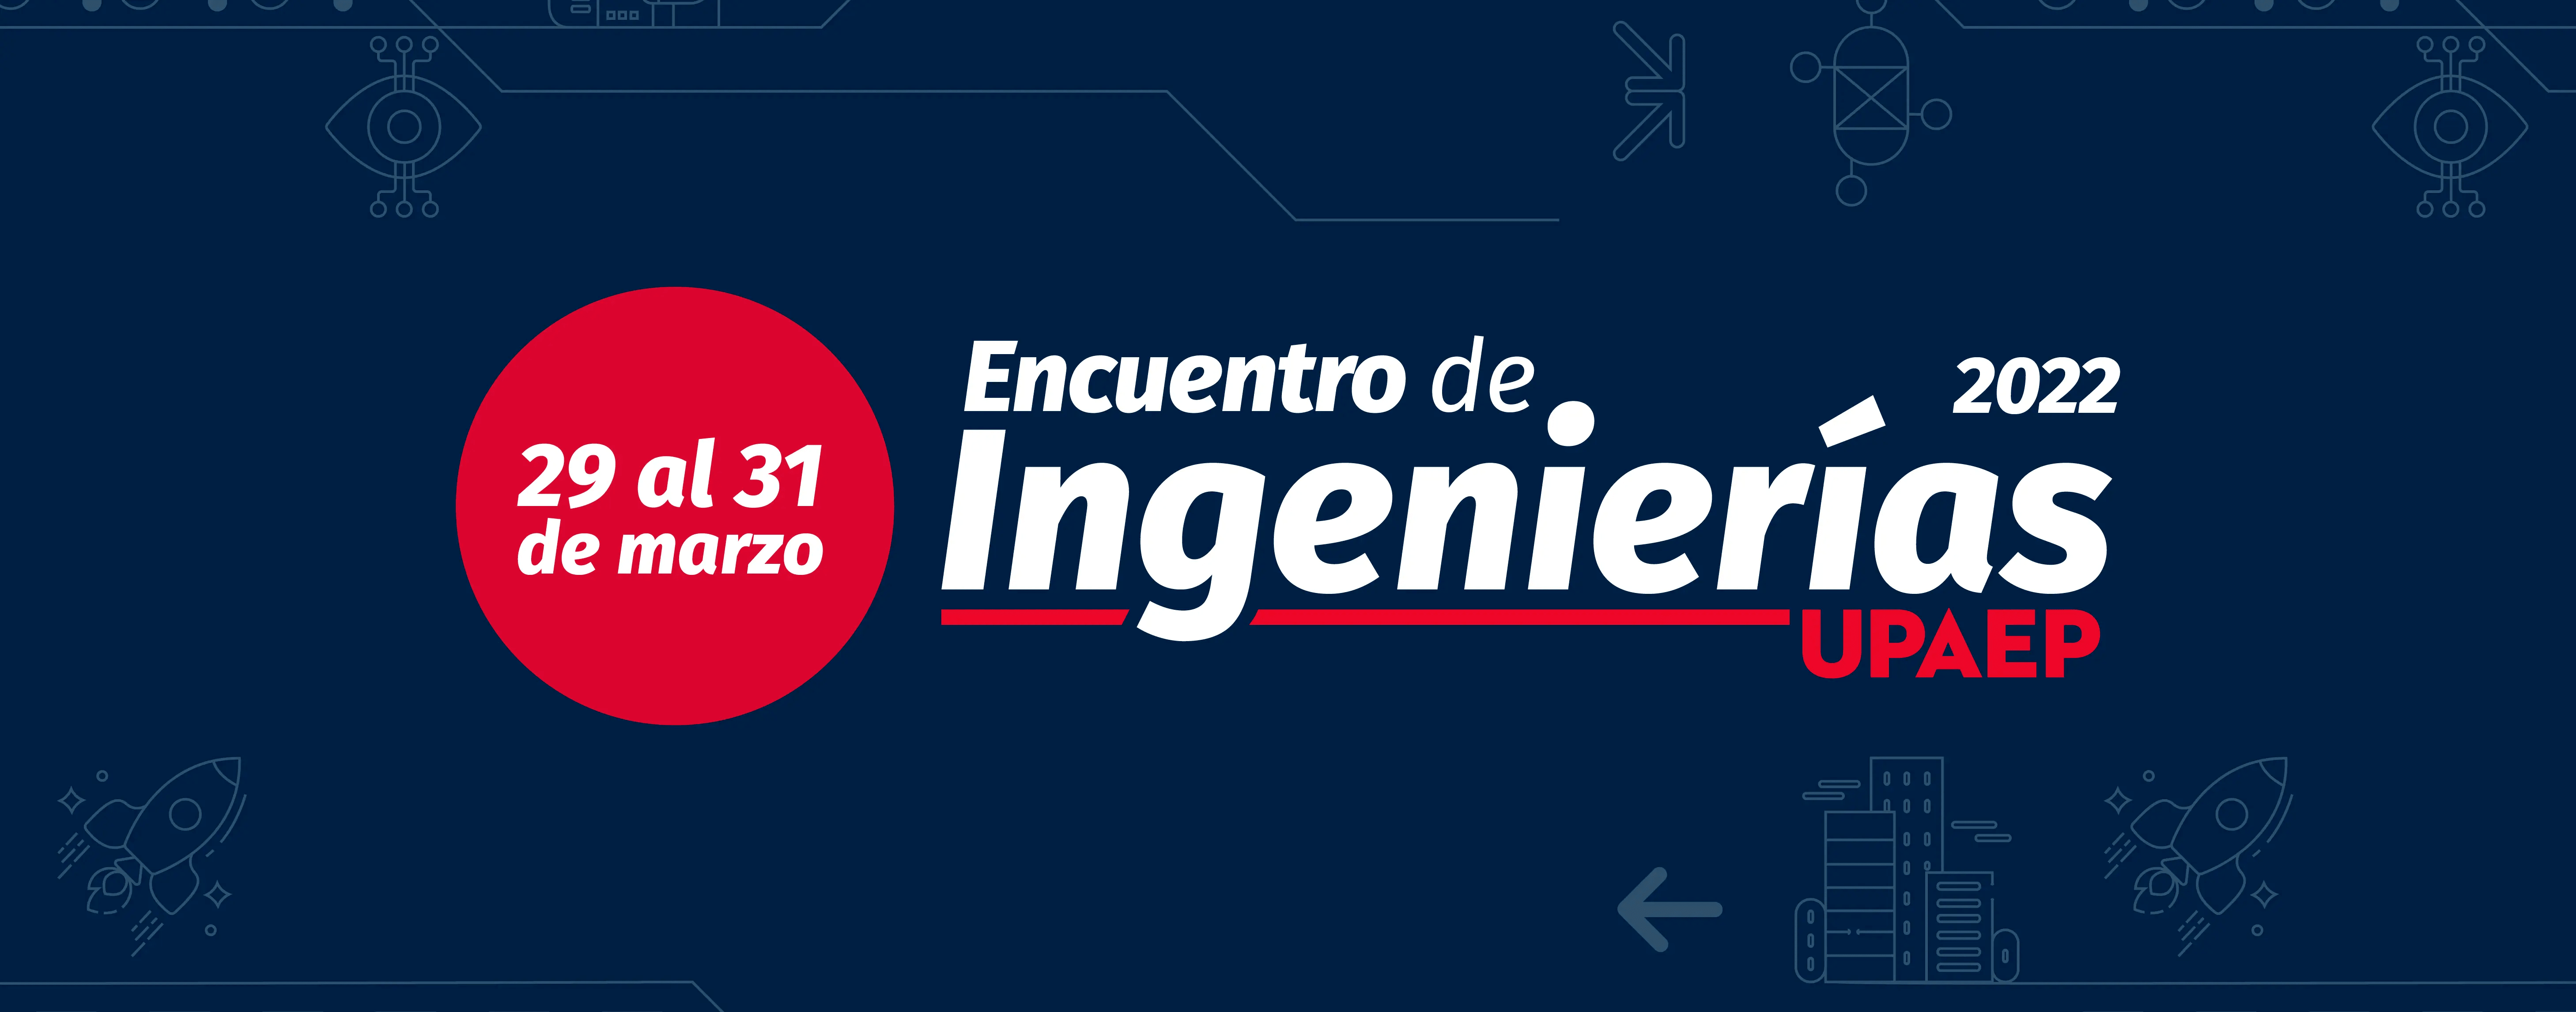 encuentro_ingenierias_banner_sitio_web